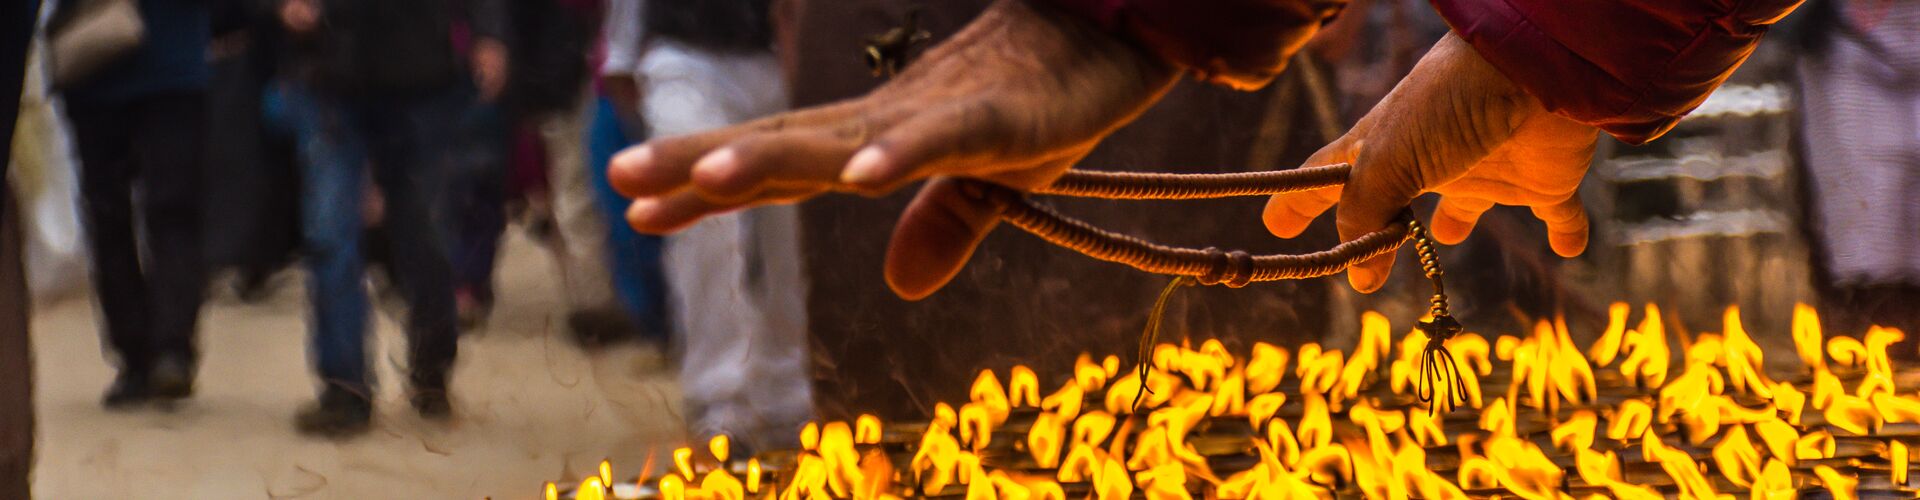 A man warming his hands over butter lamps in Kathmandu, Nepal